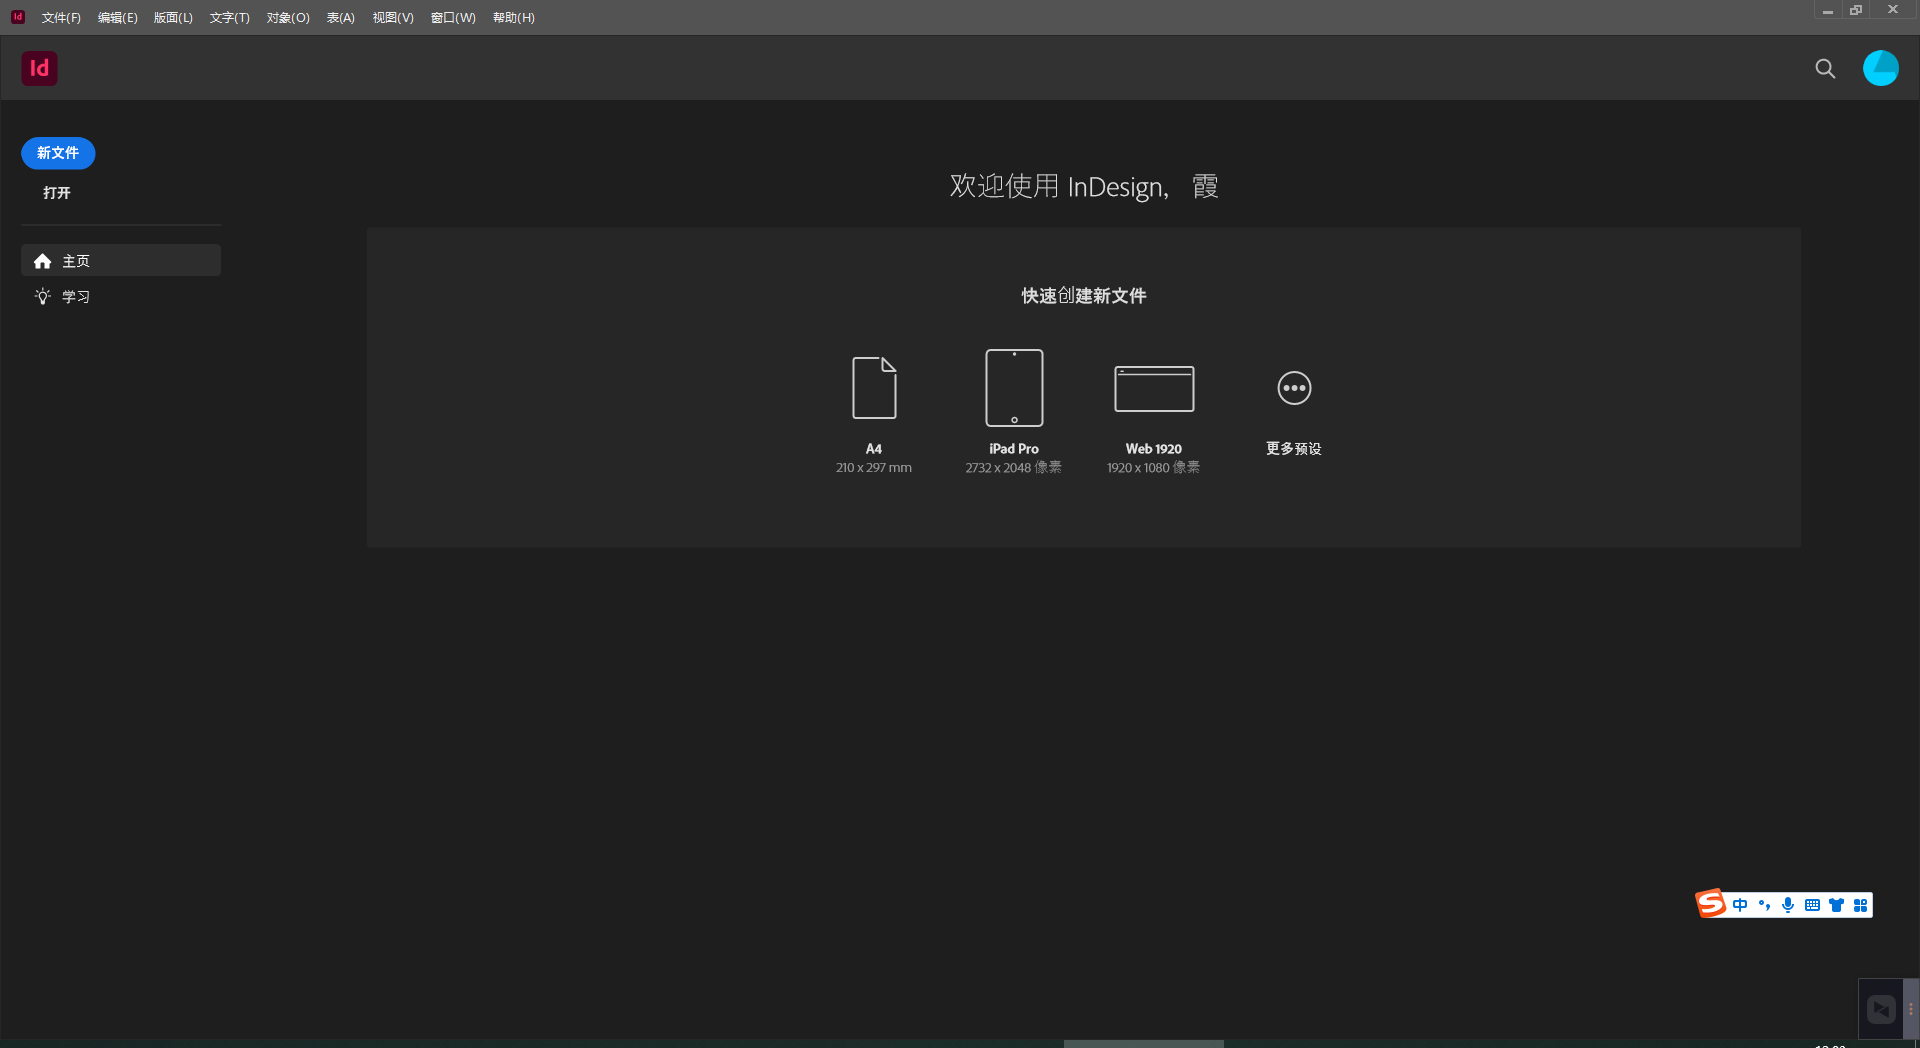 Adobe InDesign 2023 v18.5.0.57 instal the new for windows